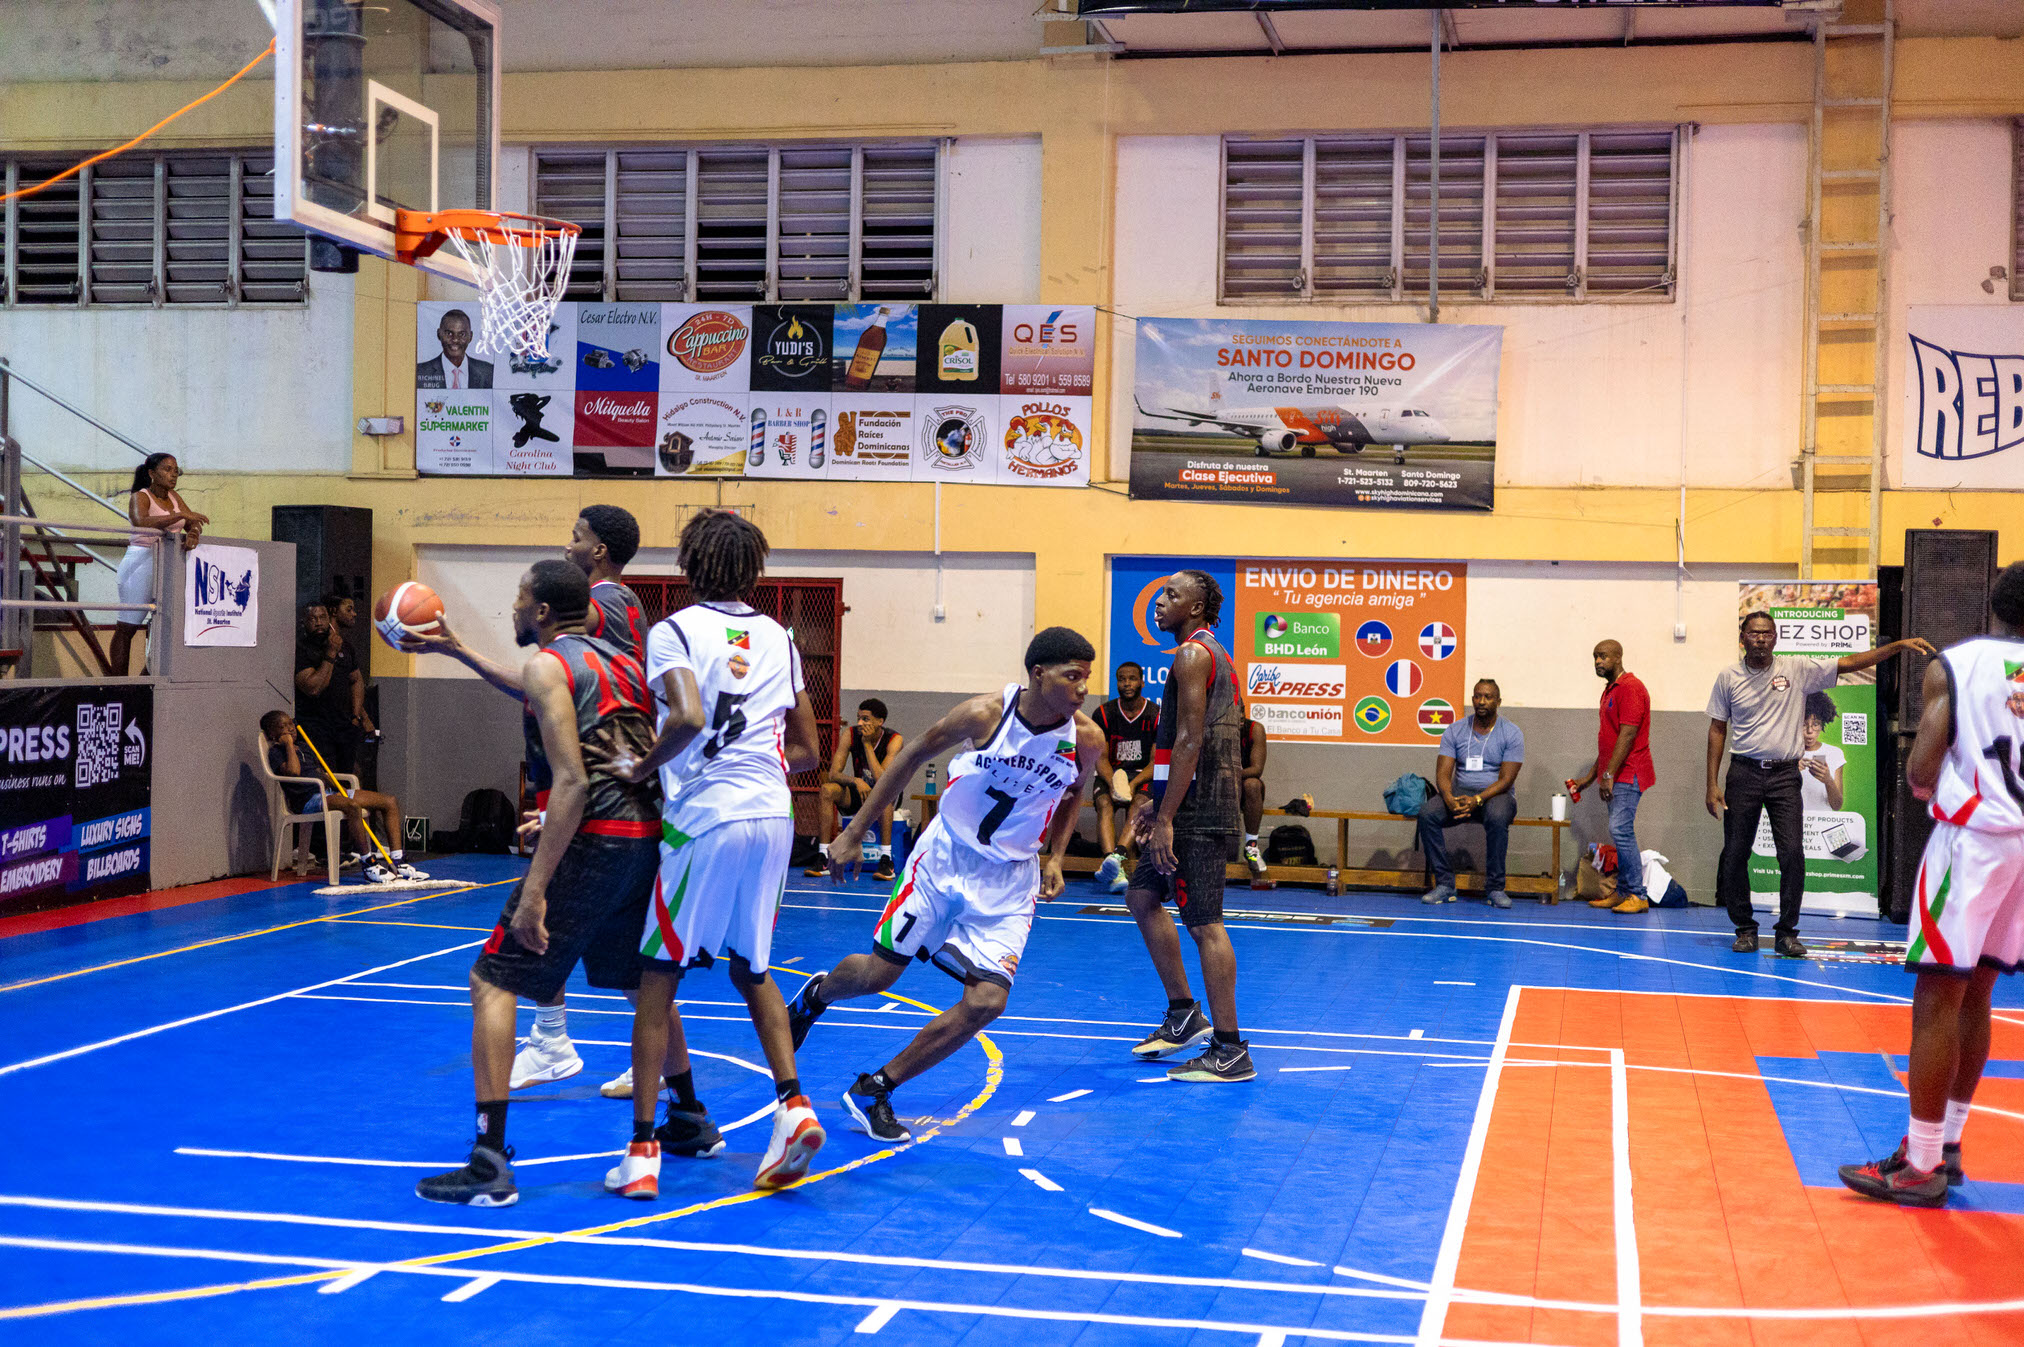 Primary School Basketball Tournament Volunteer Referees Needed